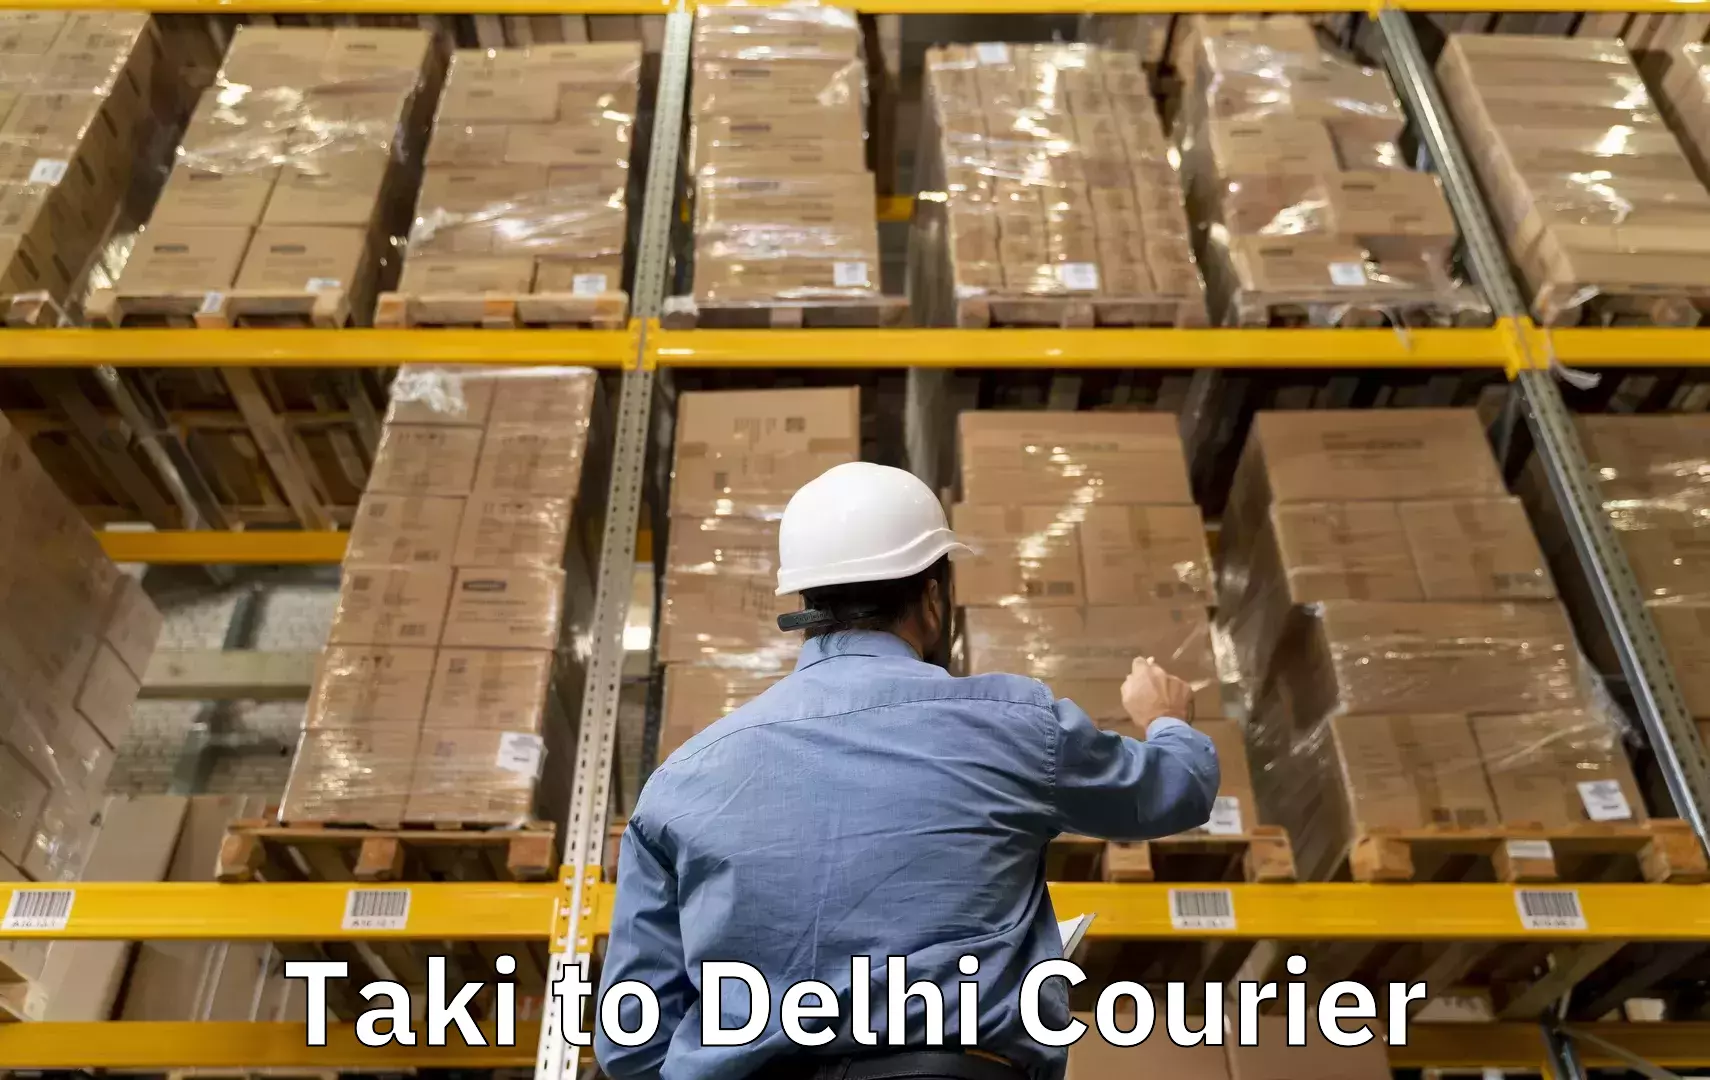 Baggage transport network Taki to East Delhi